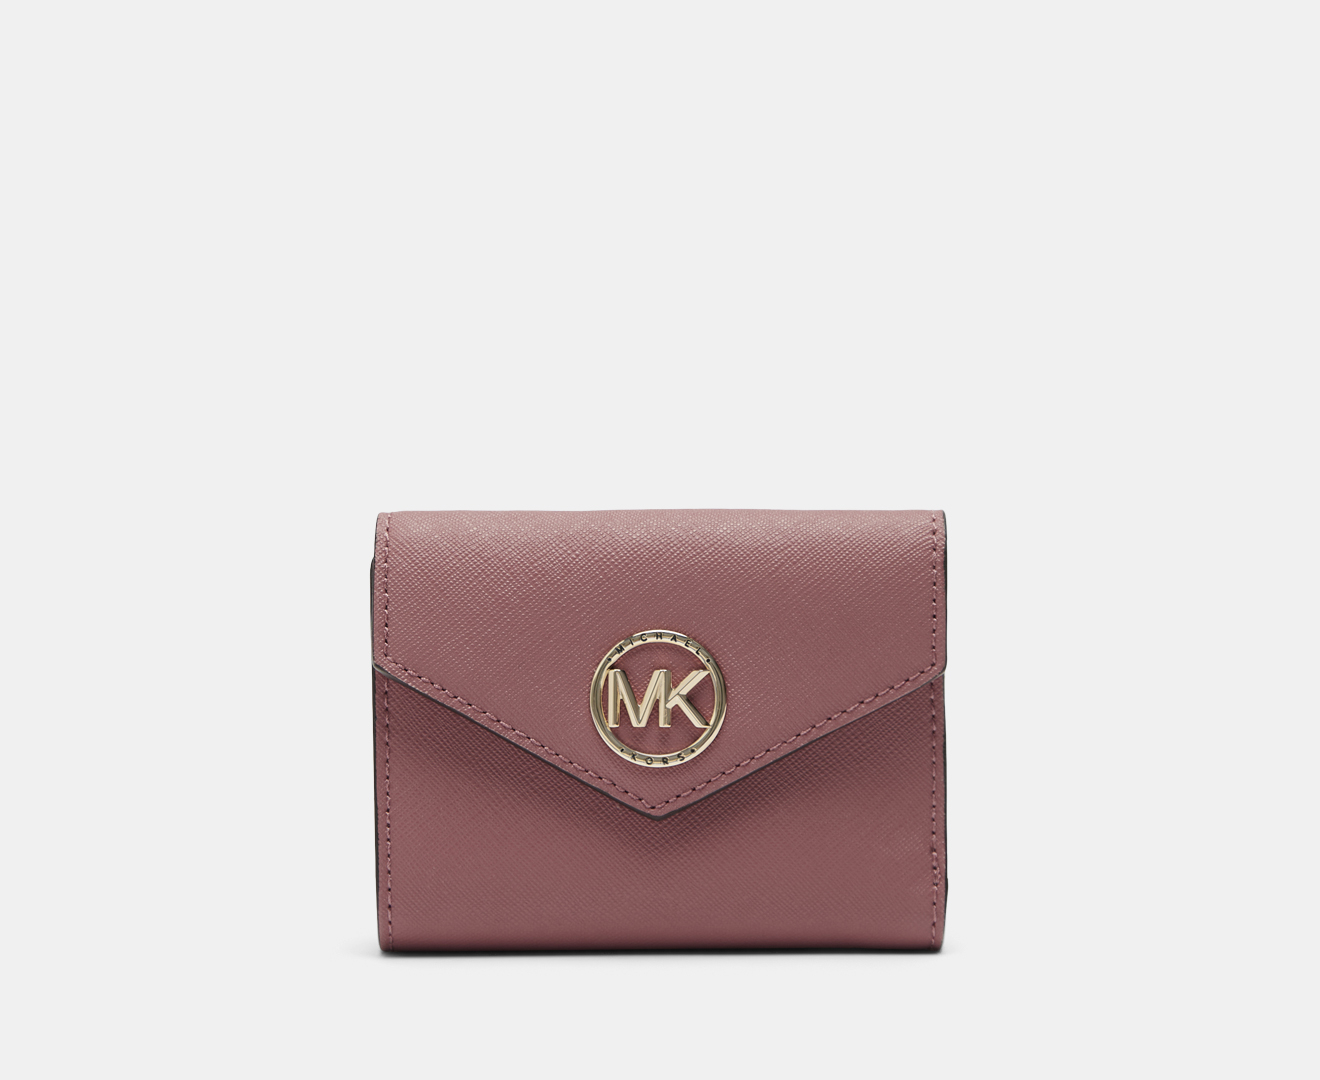 Michael Kors Greenwich Medium Envelope Trifold Leather Wallet